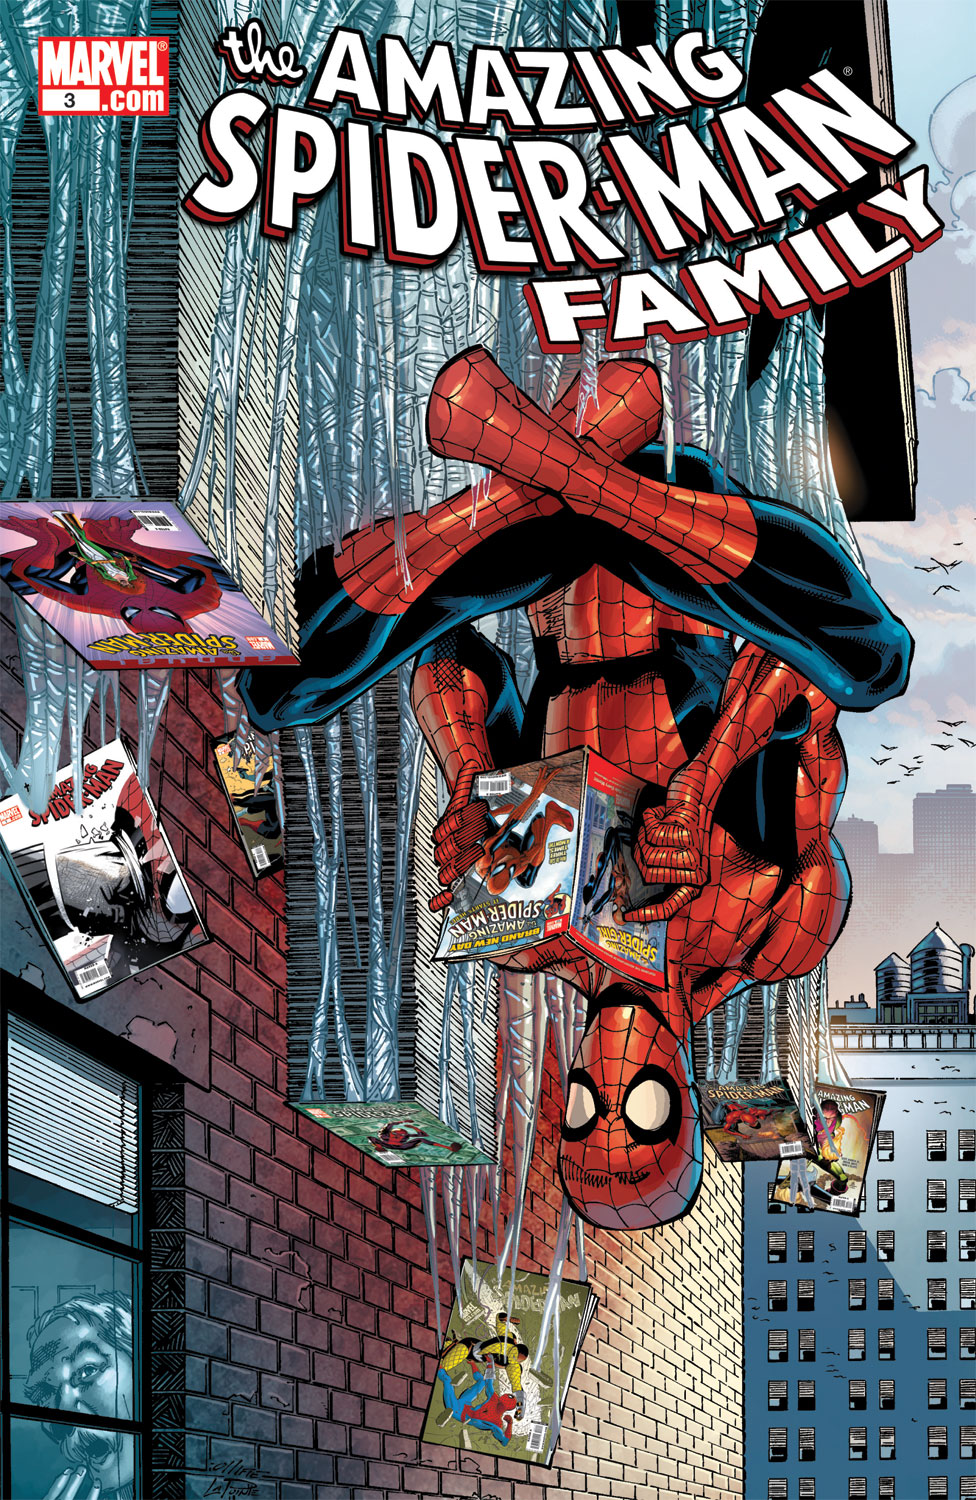 Amazing Spider-Man Family (2008) #3